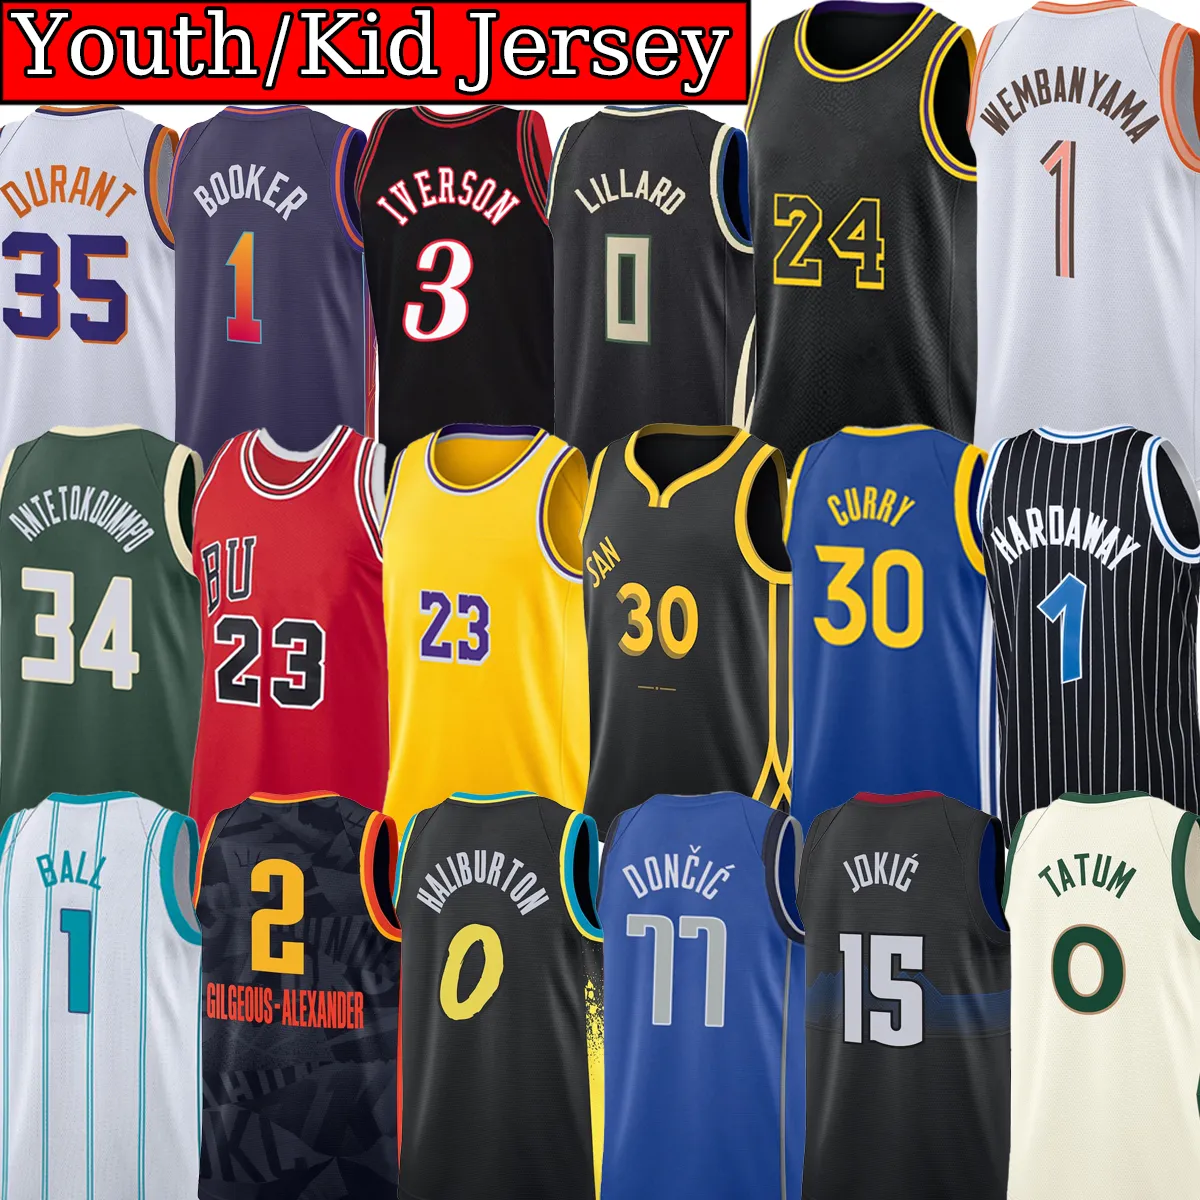 Jersey de basquete para crianças para jovens costura LeBron 6 James 23 Bryant Stephen Curry Michael Bird Durant Iverson Butler Wembanyama Giannis Antetokounmpo Jersey Kids